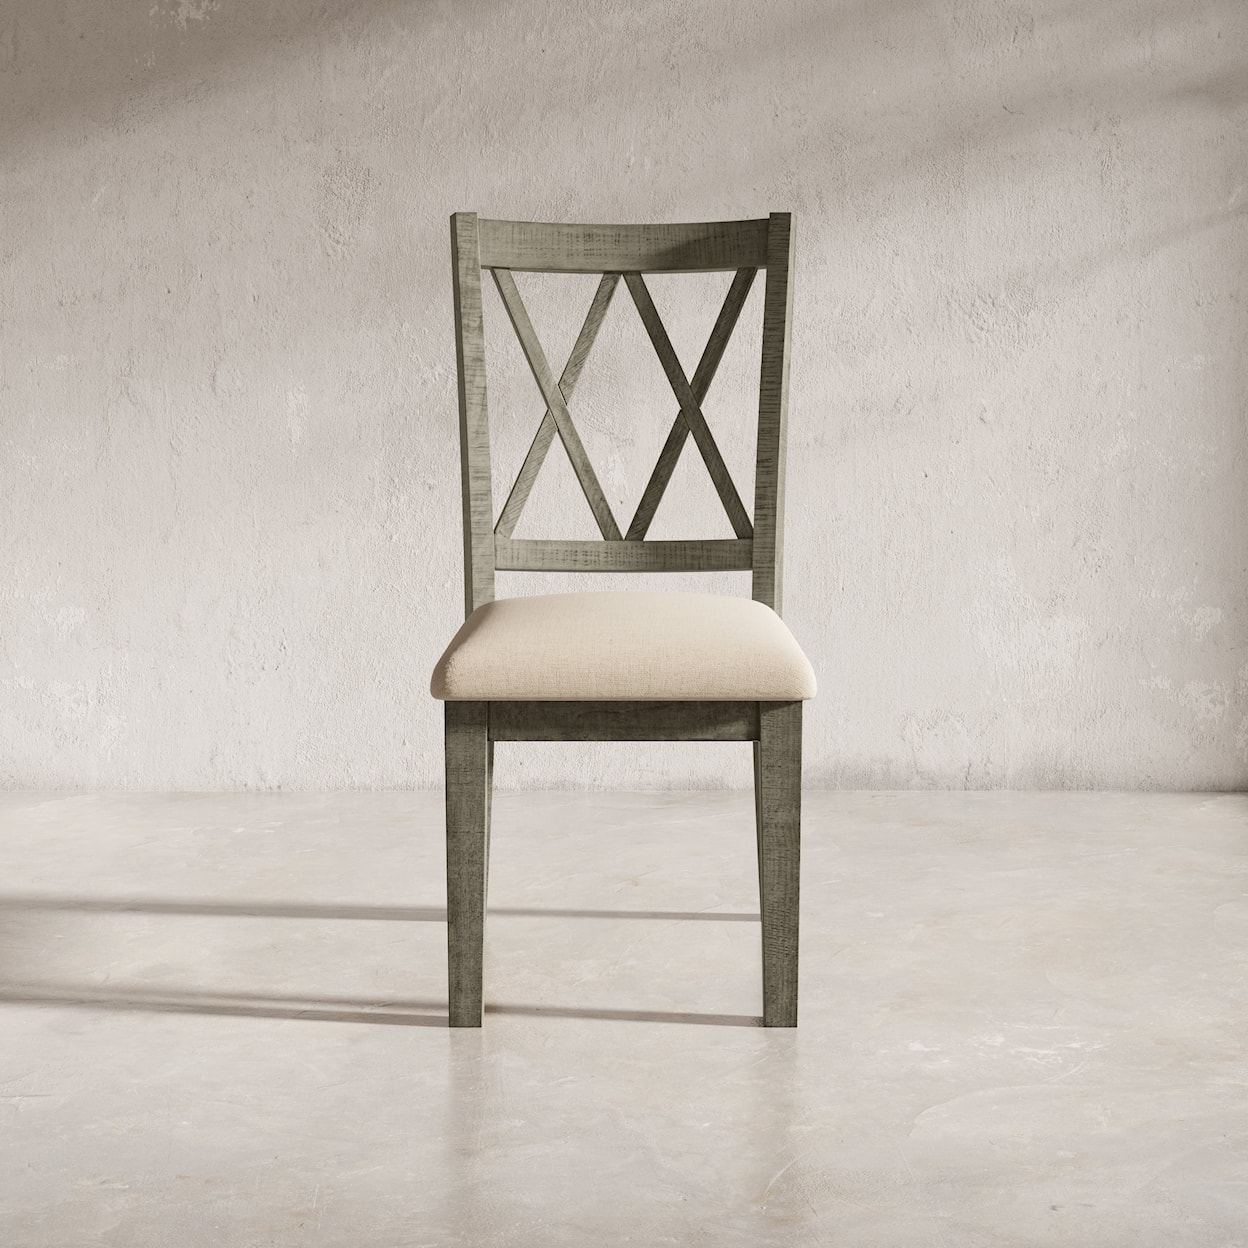 Jofran Telluride Dining Chair